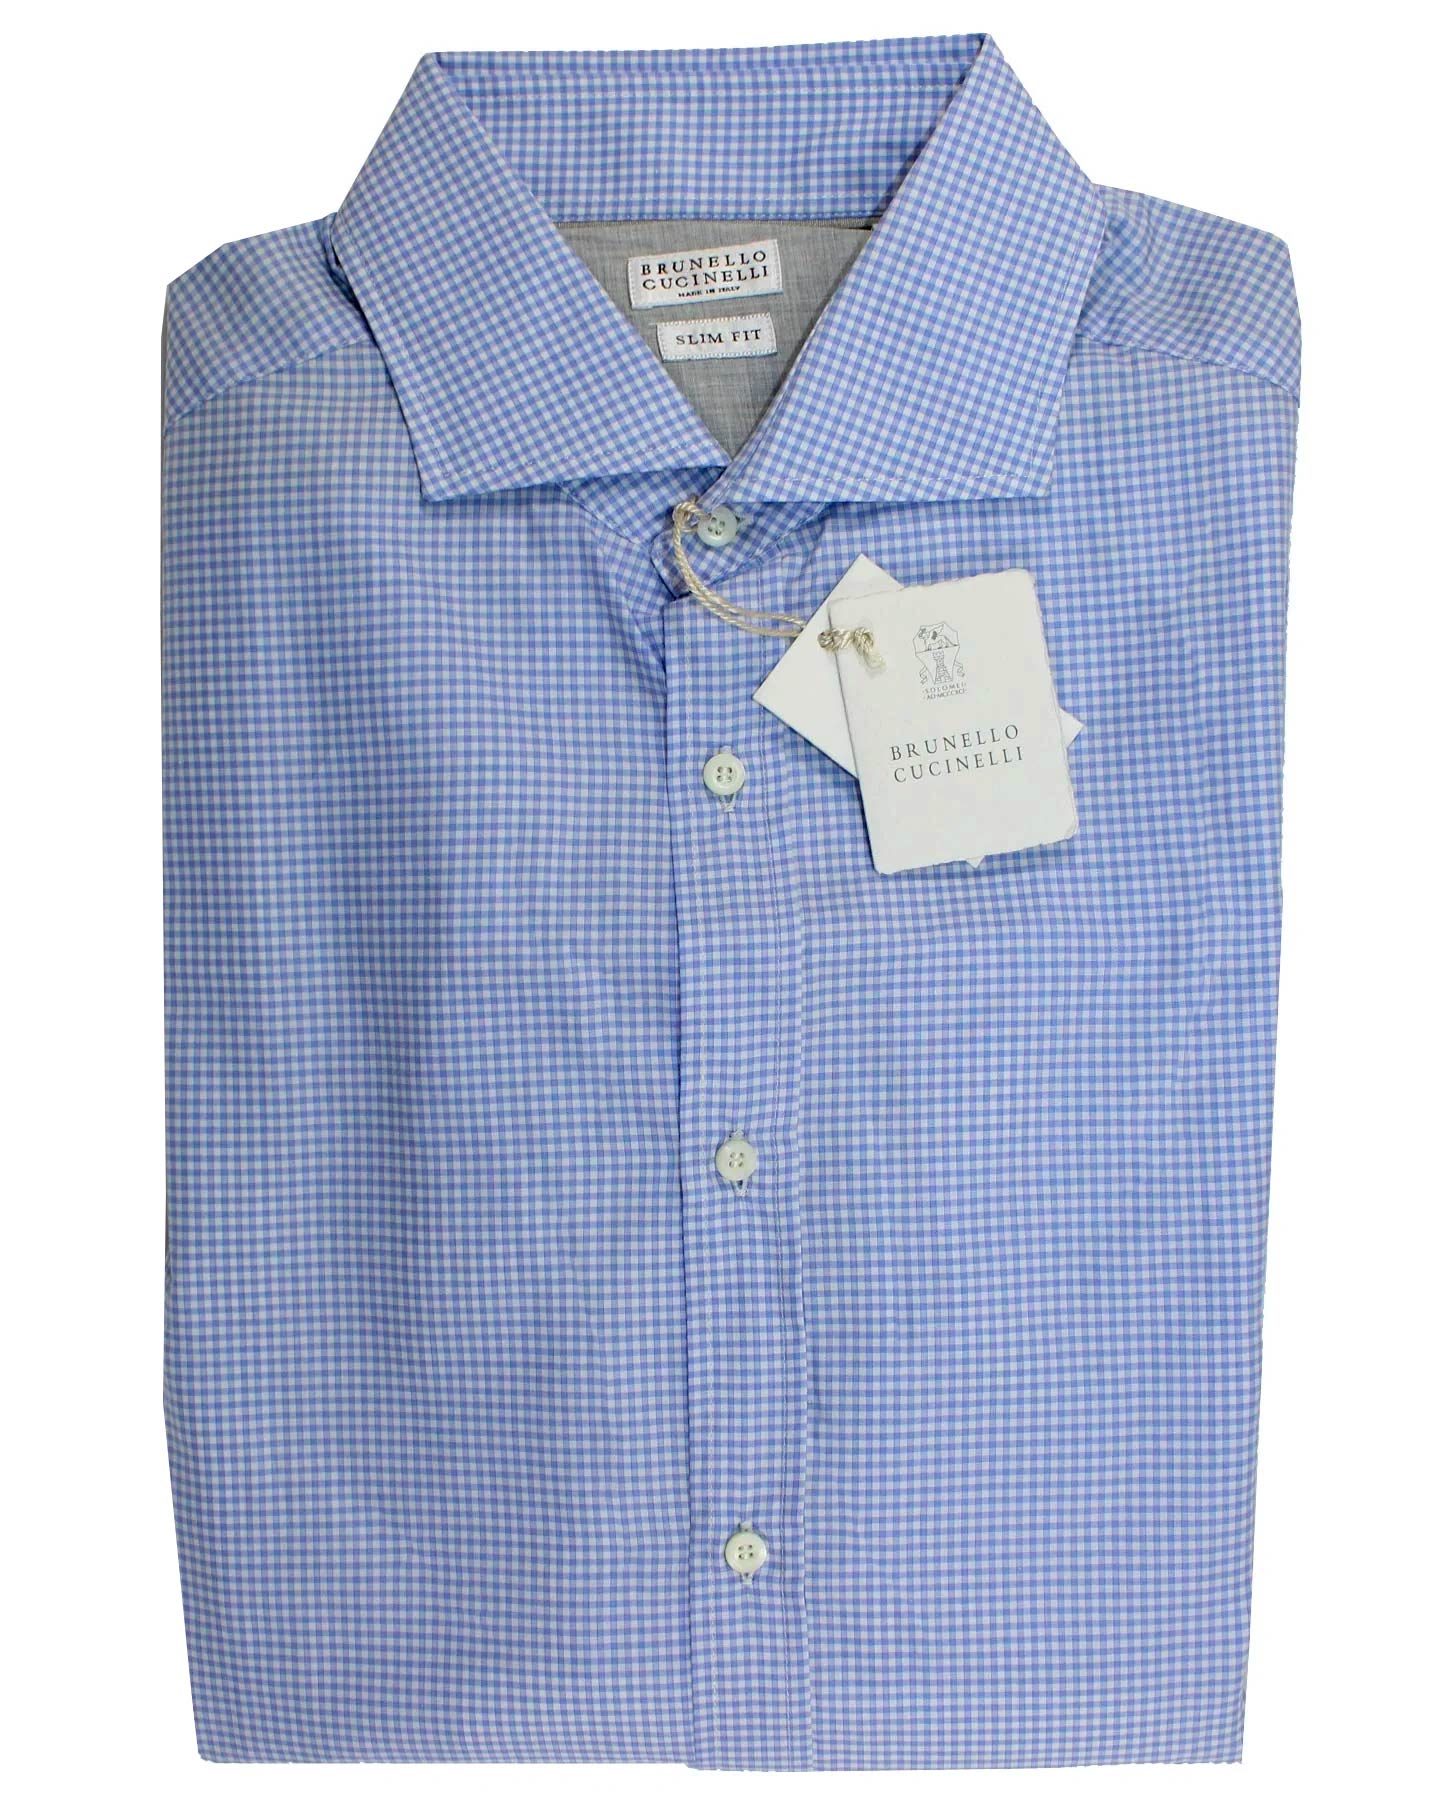 Brunello Cucinelli Dress Shirt White Blue Check